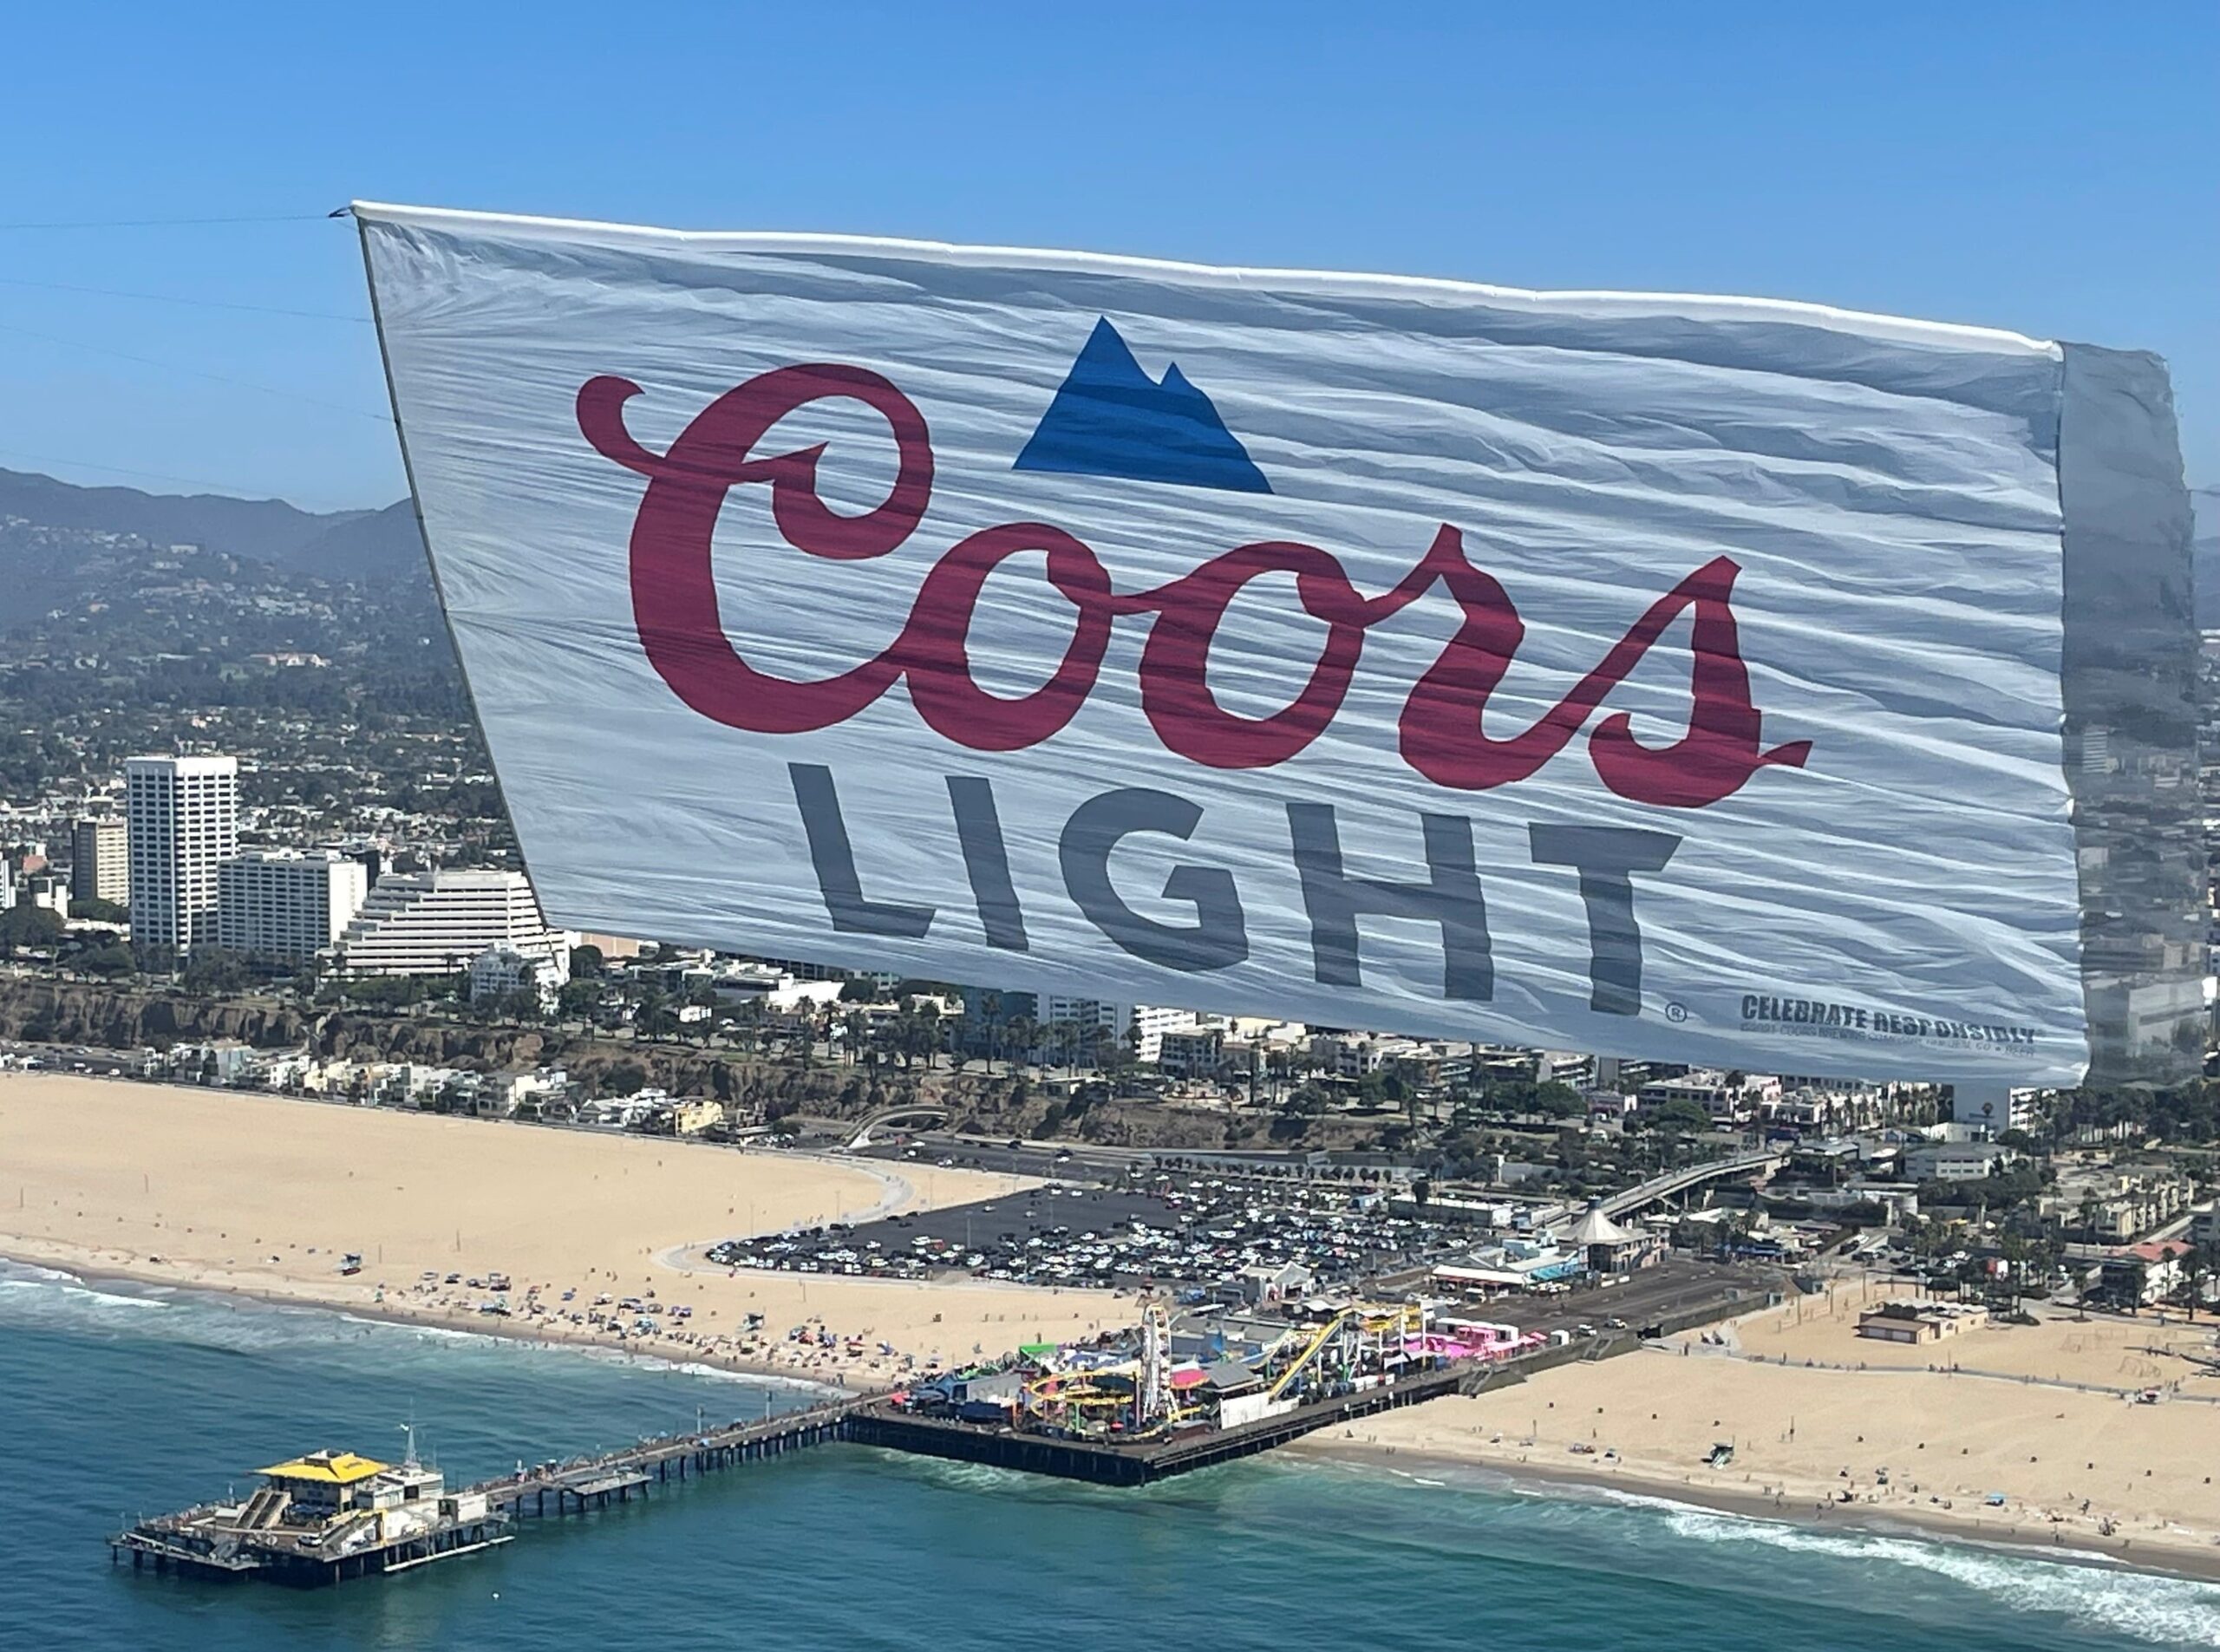 Coors Light Aerial Billboard